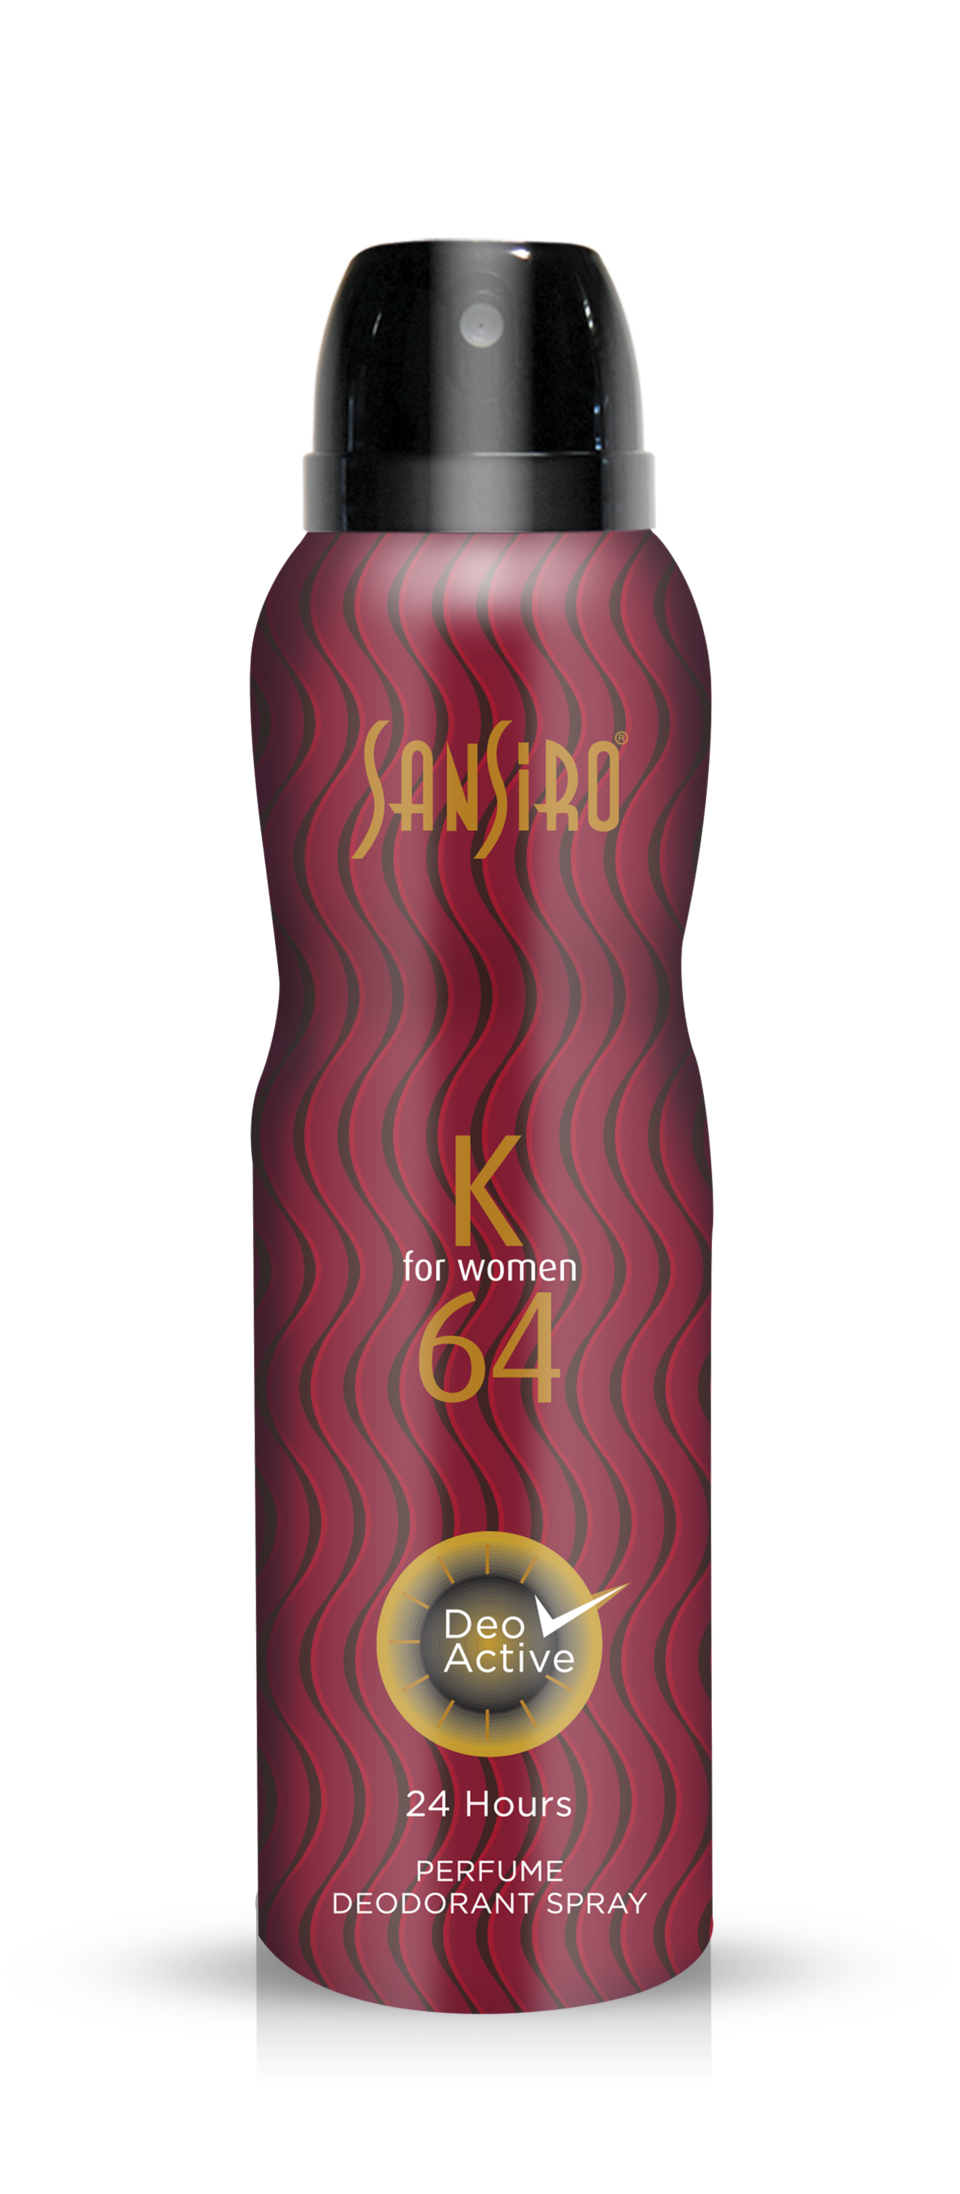 Sansiro Perfume - Deo For Women - Deodorant K64